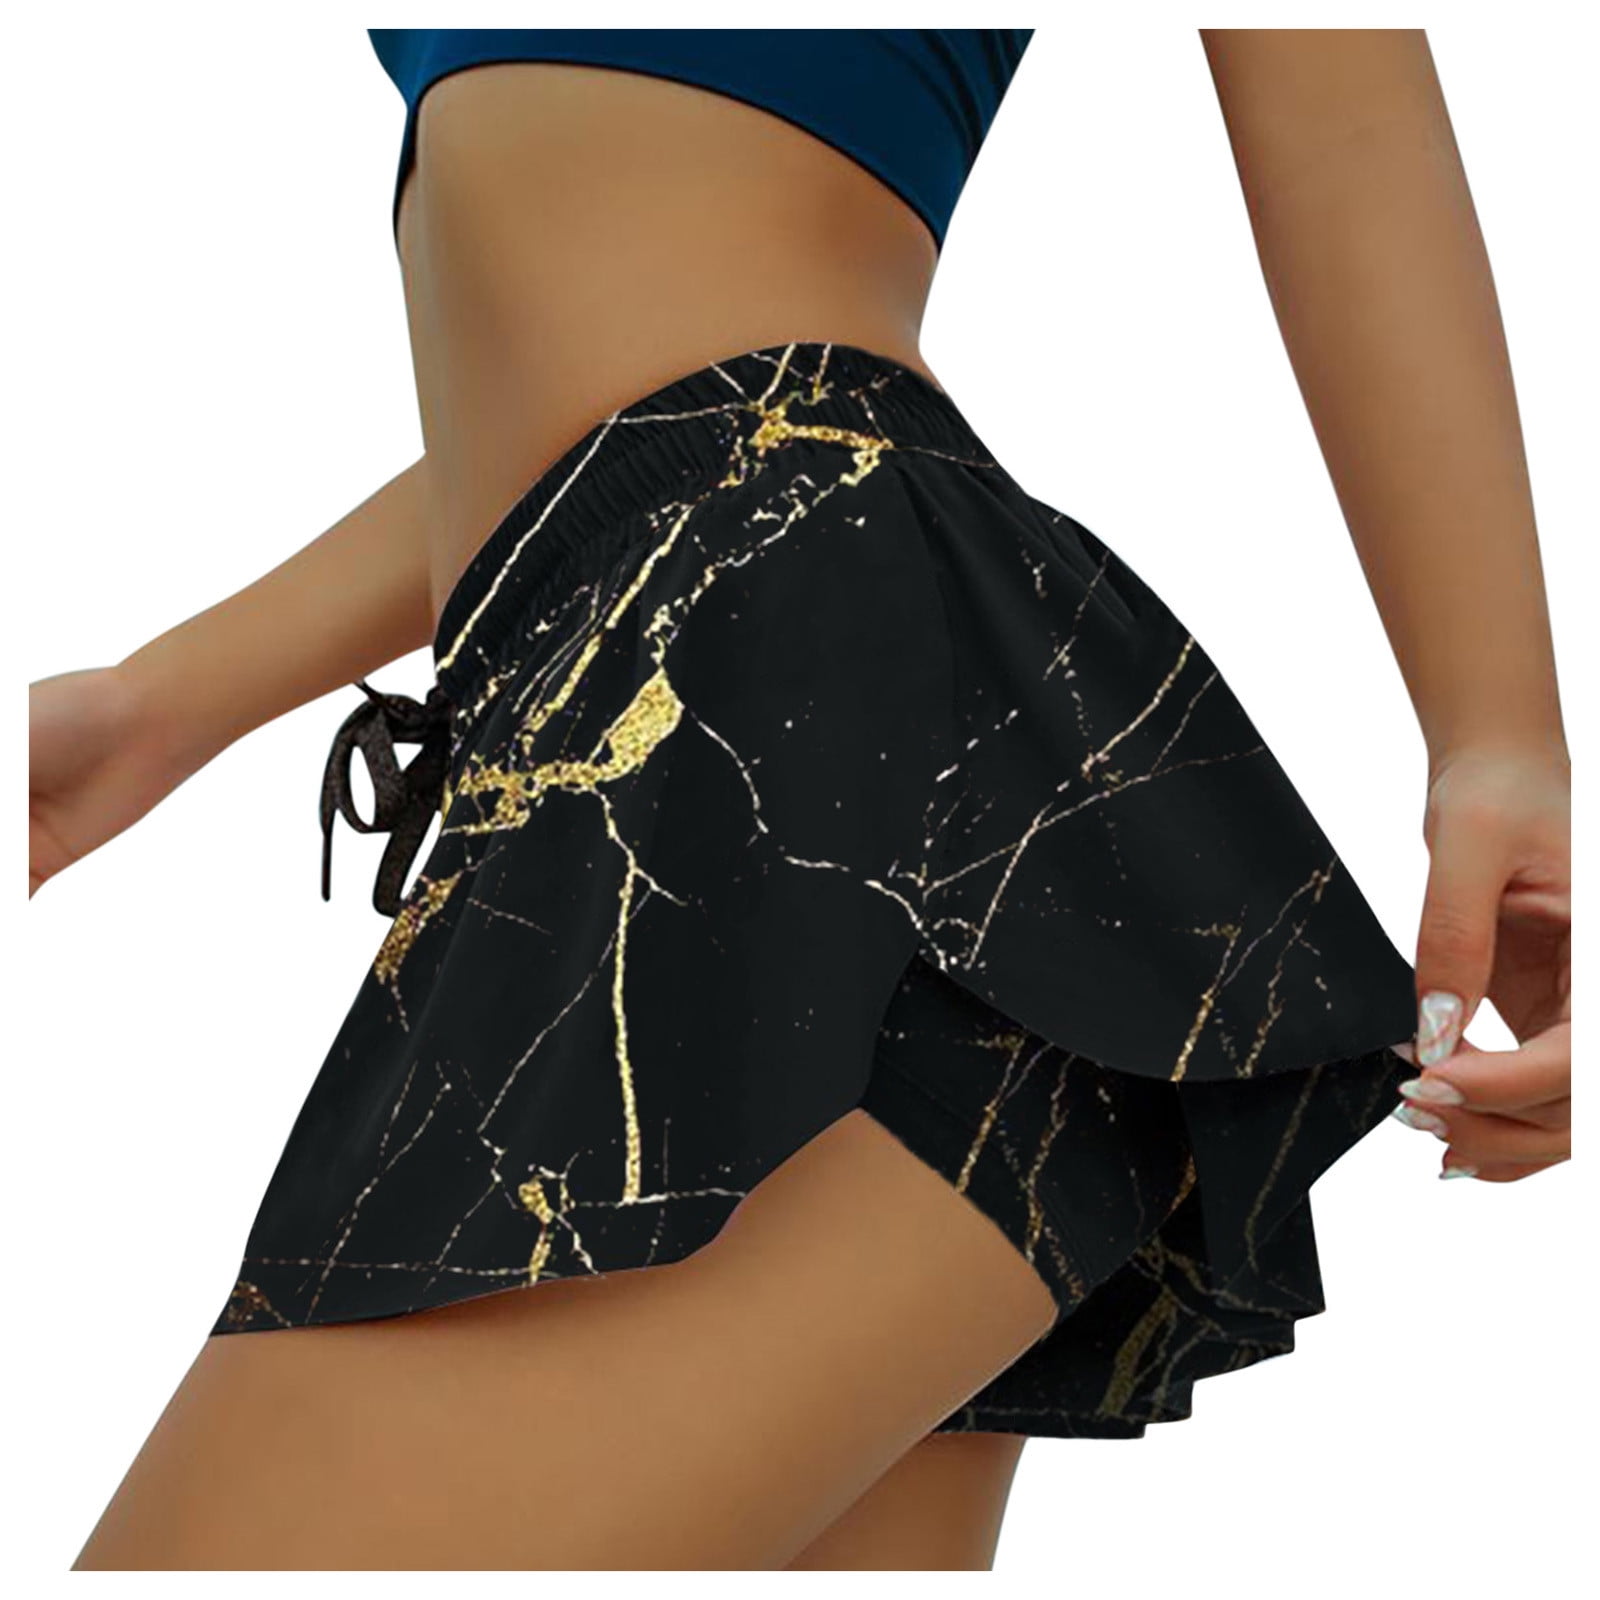 Short Pants Technical Fashion Illustration. Skirt and Shorts